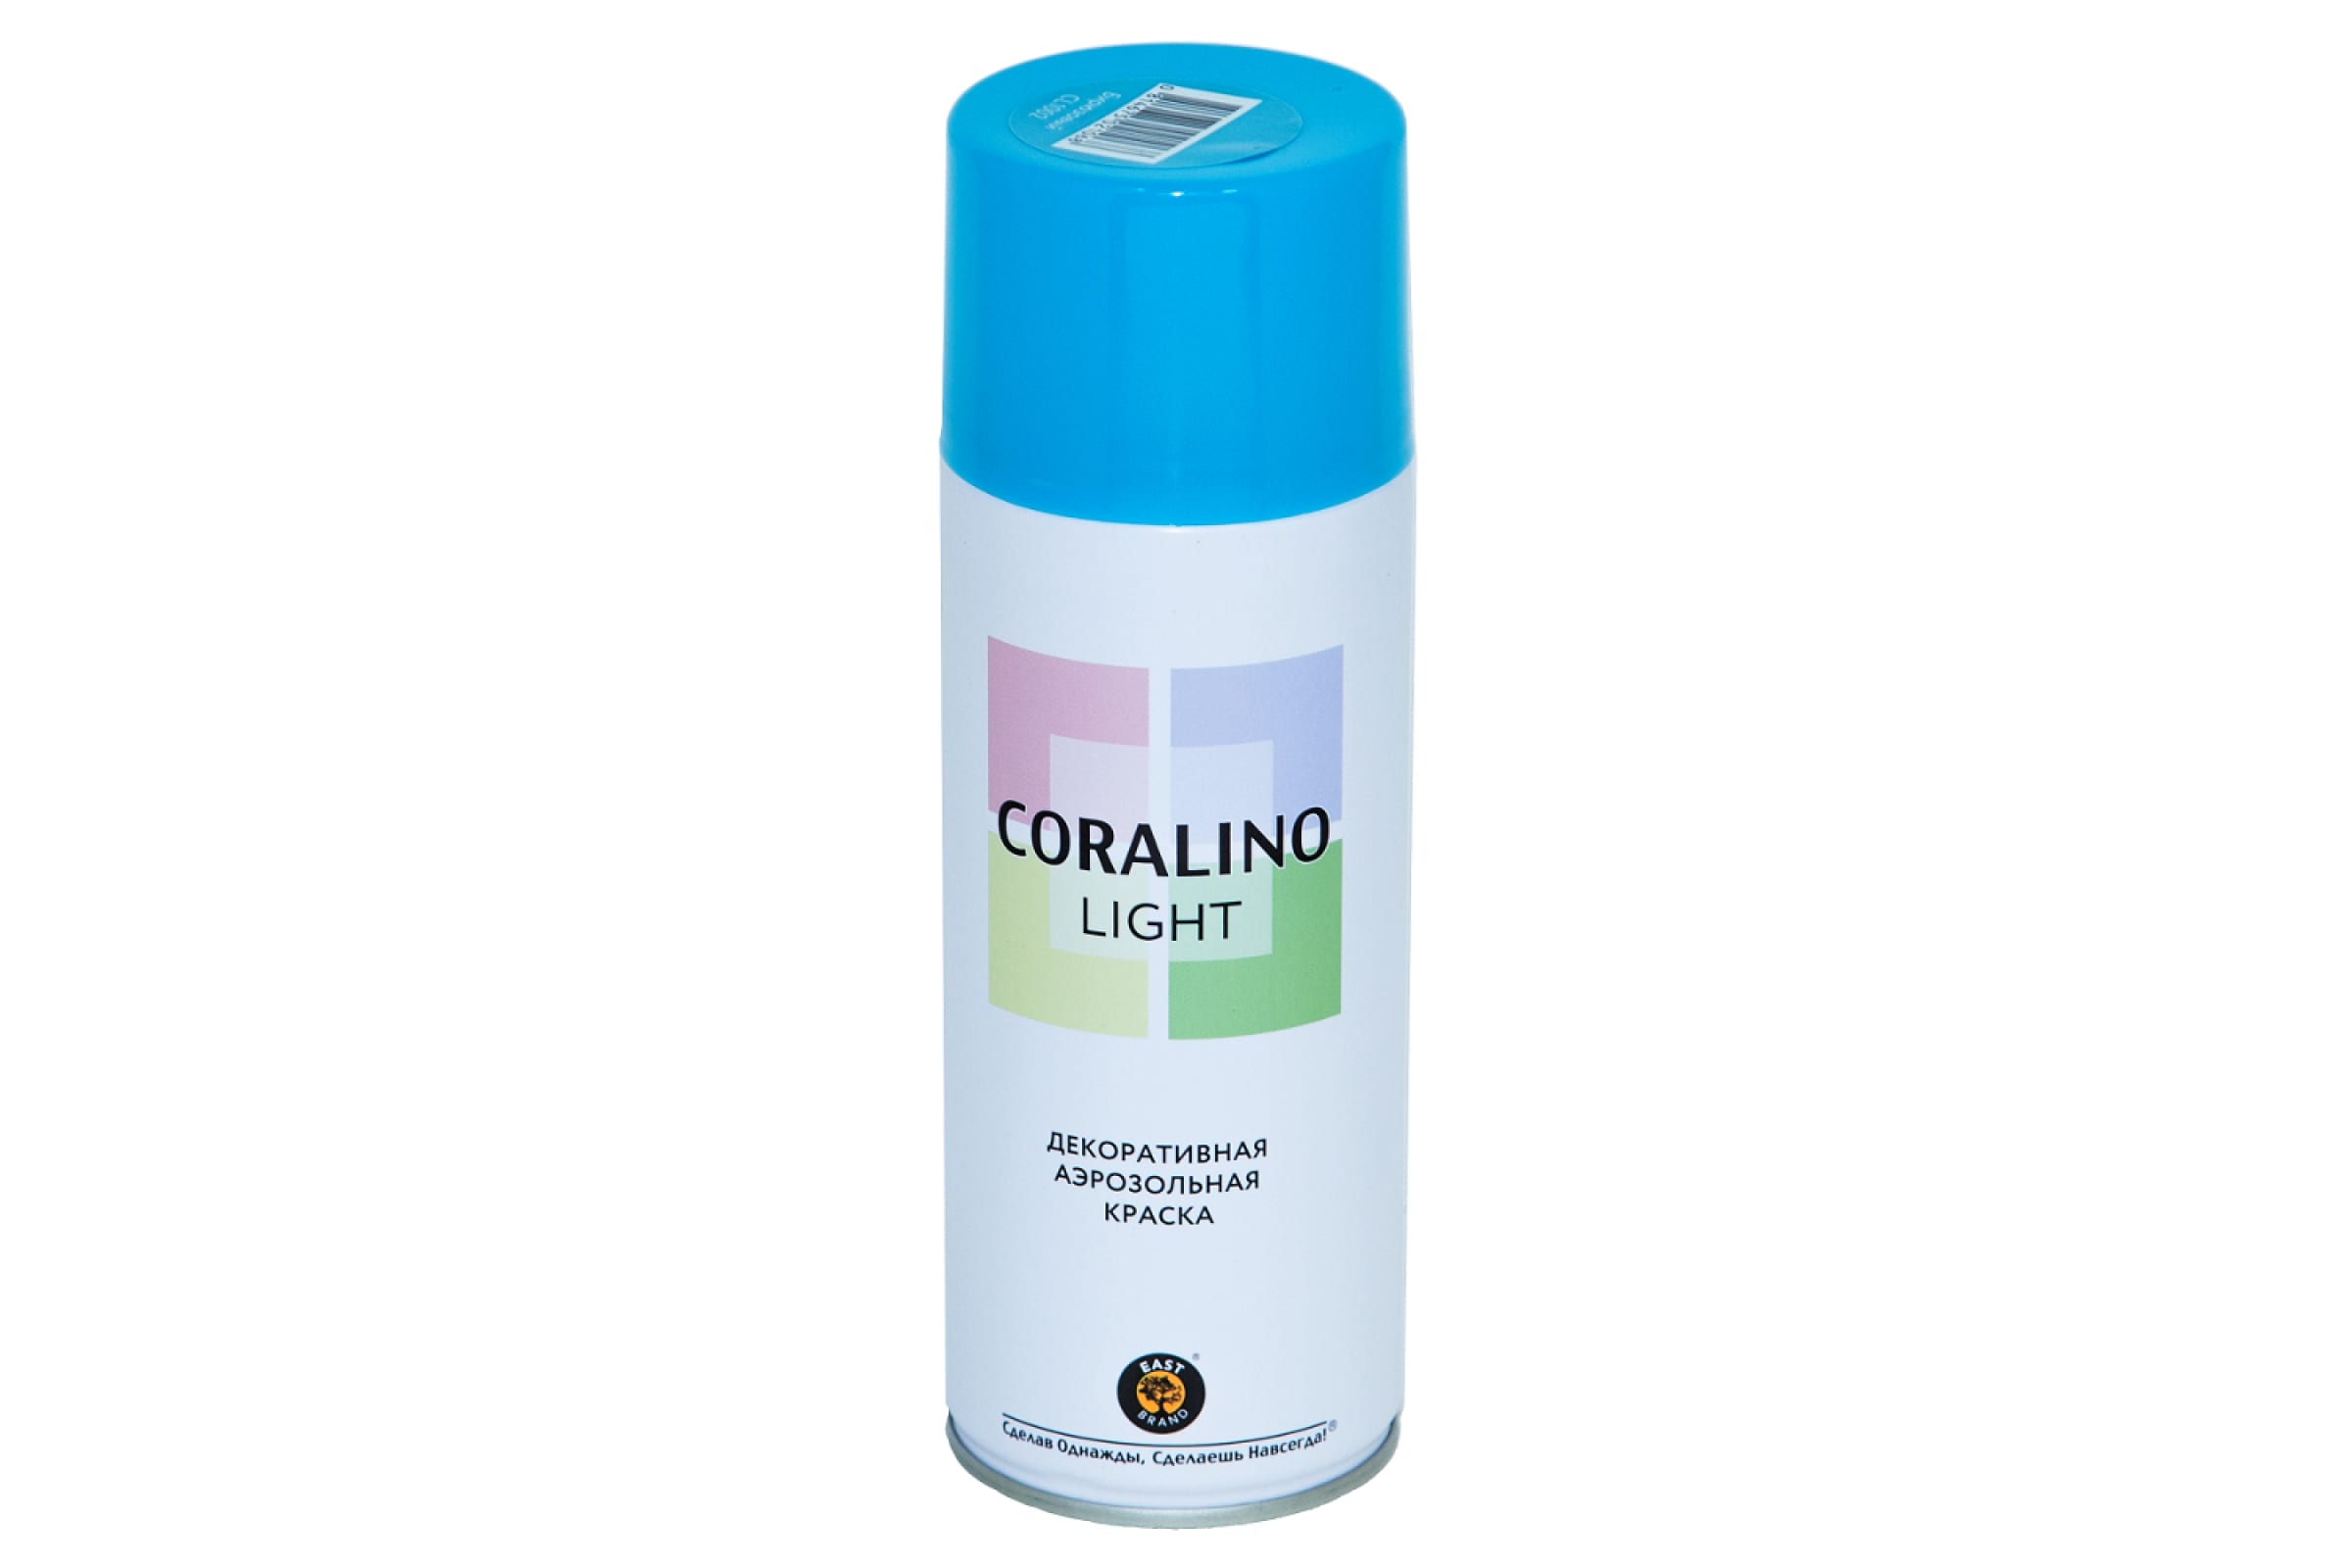 CORALINO LIGHT Краска аэроз. декоративная , Бирюзовый CL1002 краска акриловая aturi бирюзовый перламутр 60 г